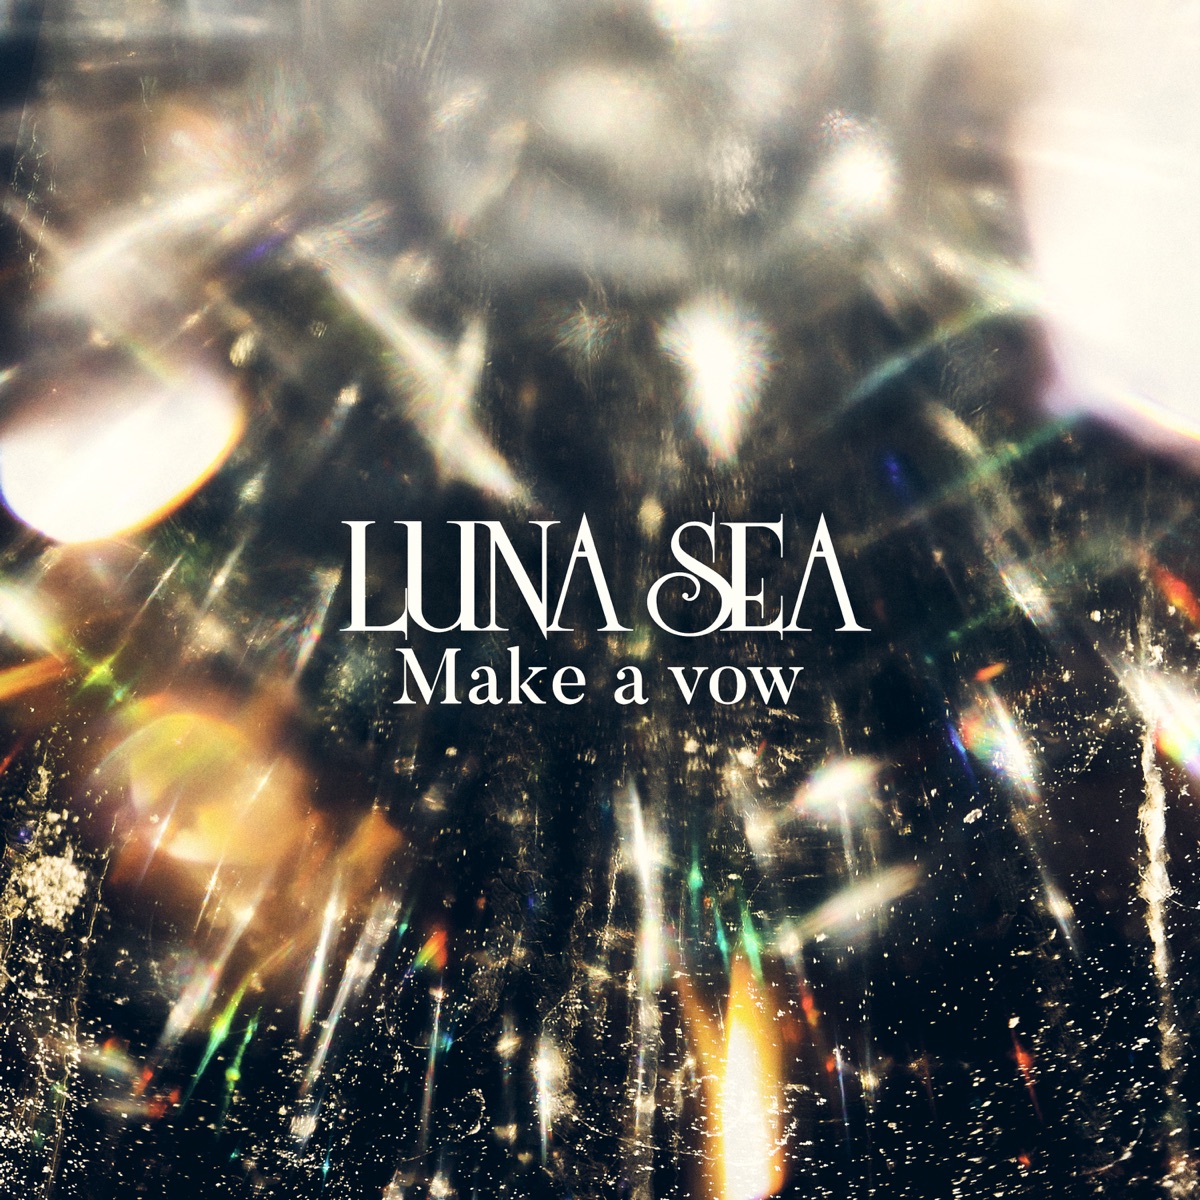 『LUNA SEA - Make a vow』収録の『Make a vow』ジャケット